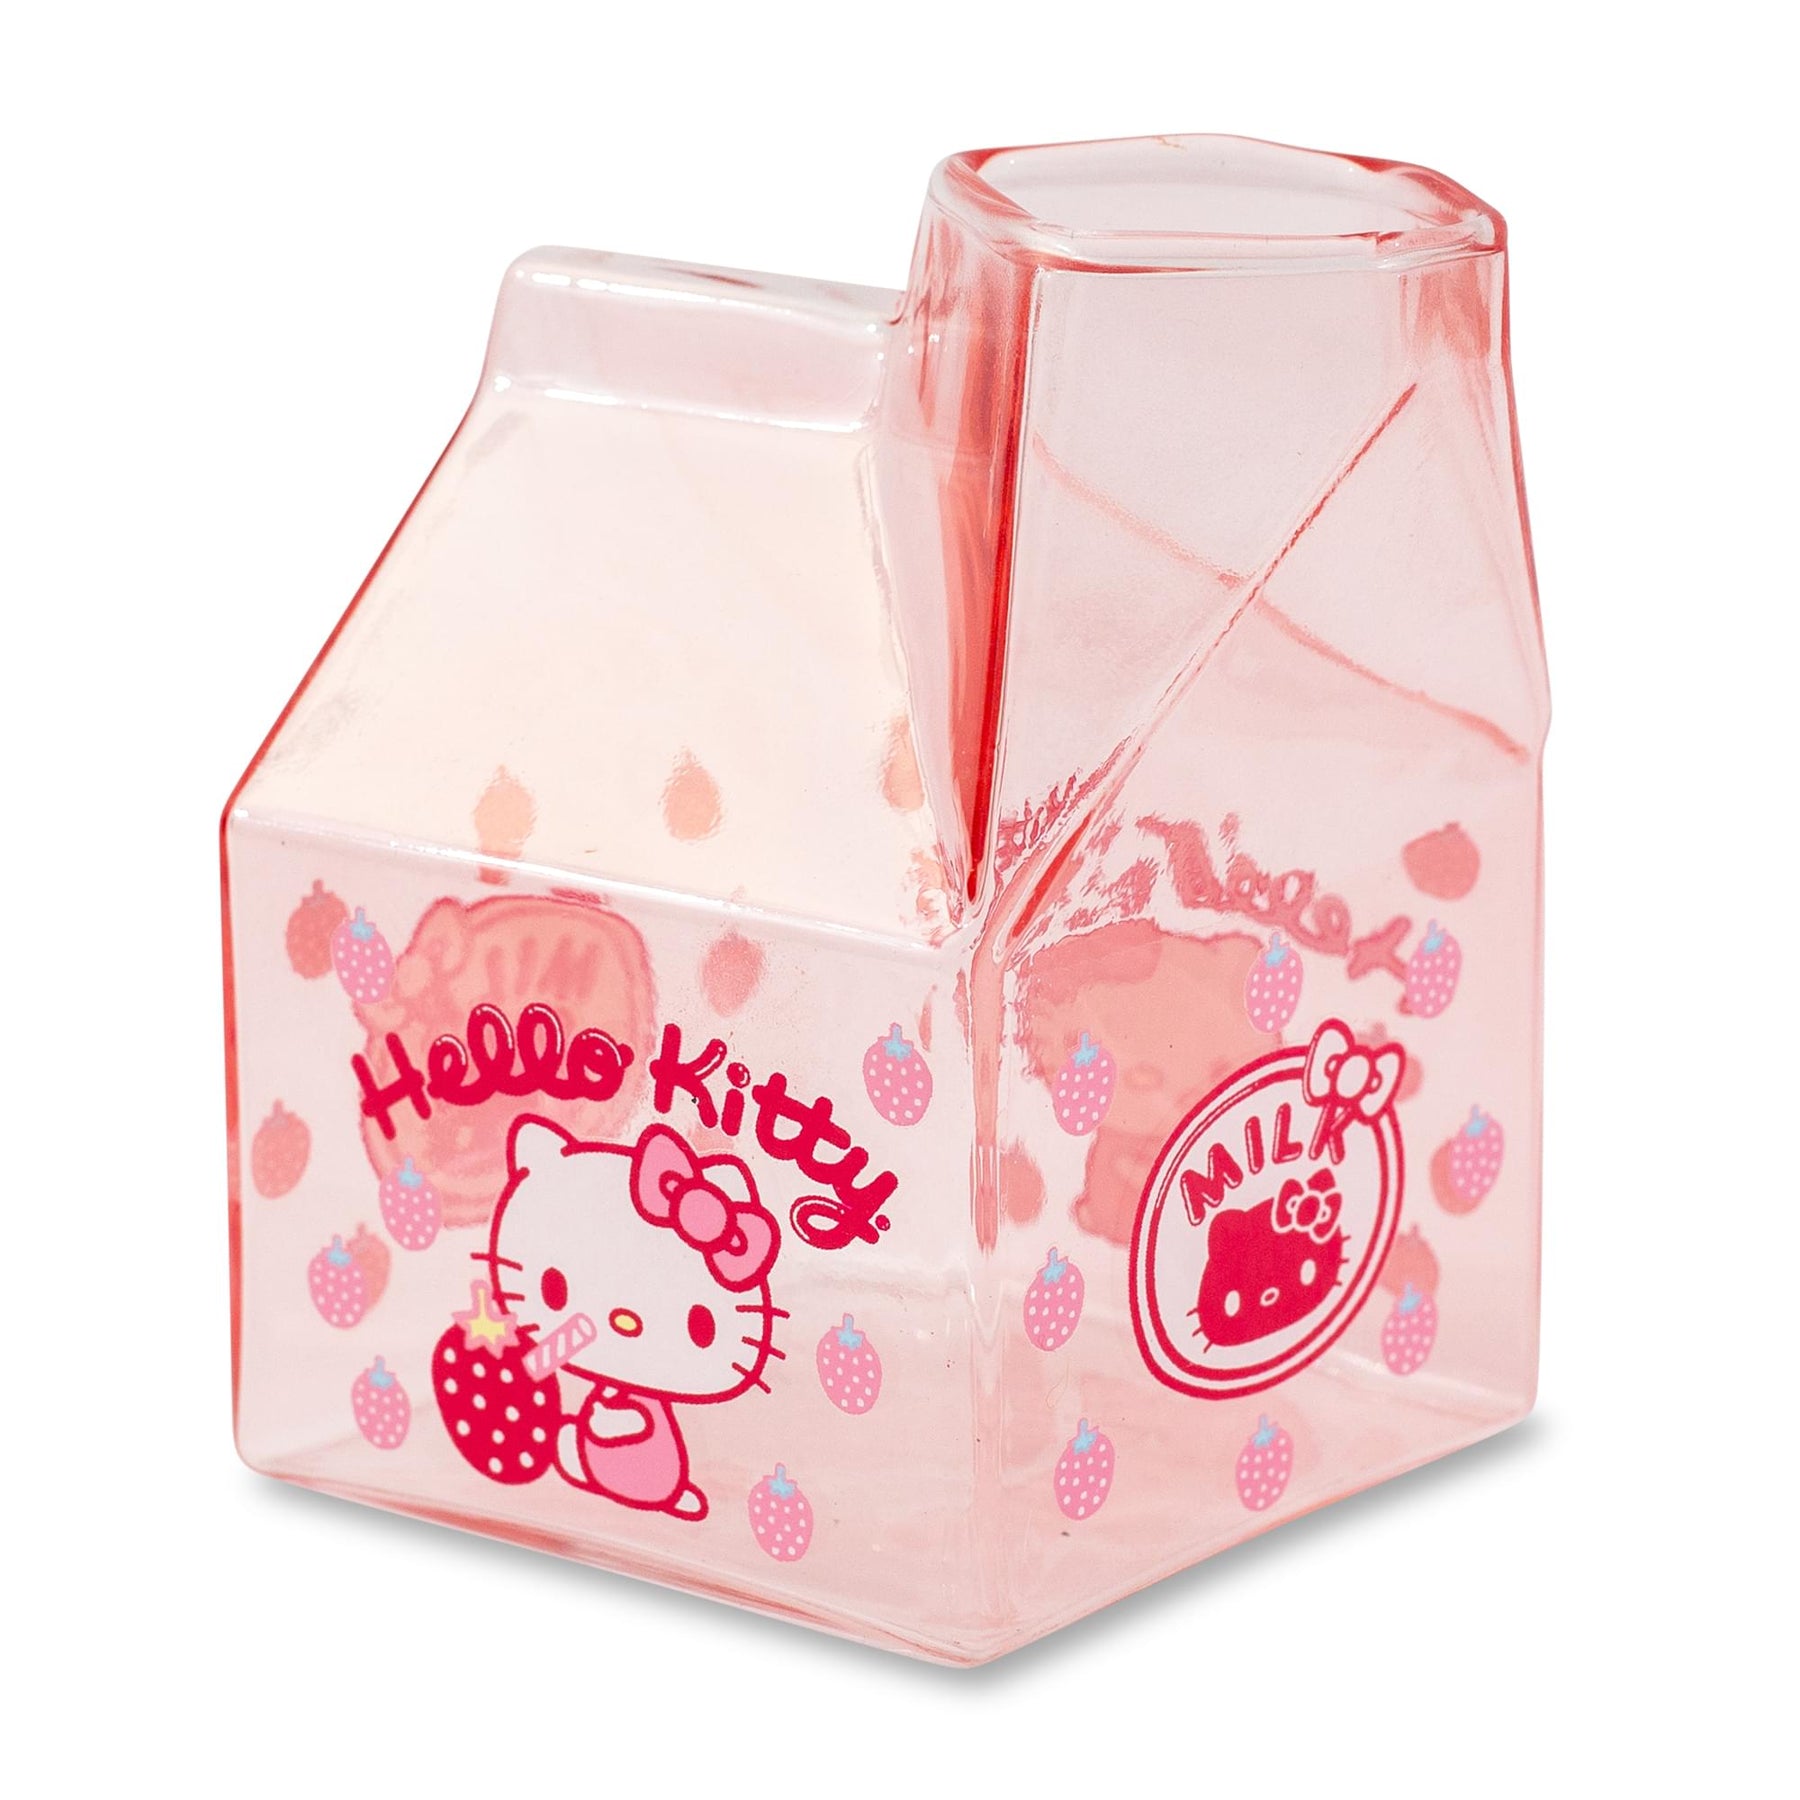 Kawaii Inspired Snowglobe Strawberry Kitty Gifts for Her Handmade